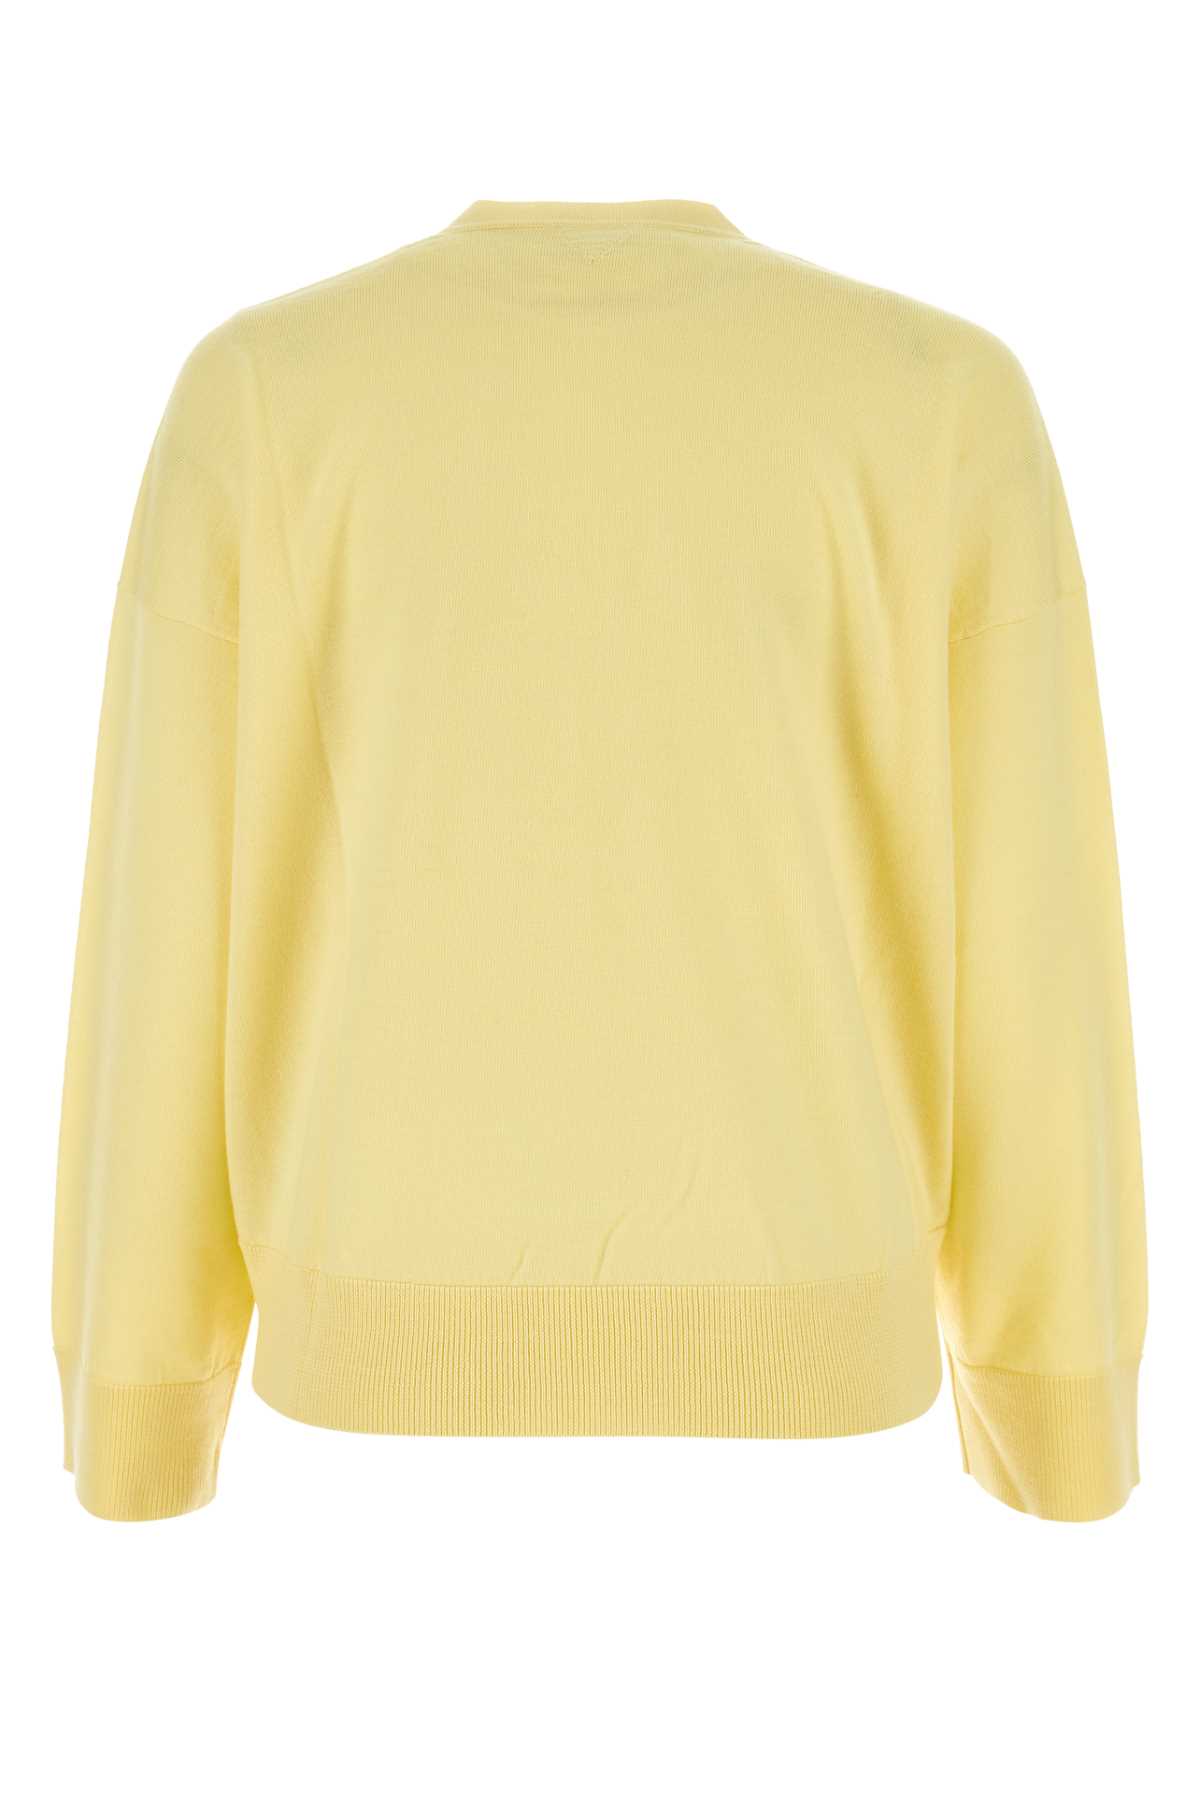 Bottega Veneta Yellow Wool Oversize Sweater In Giallo